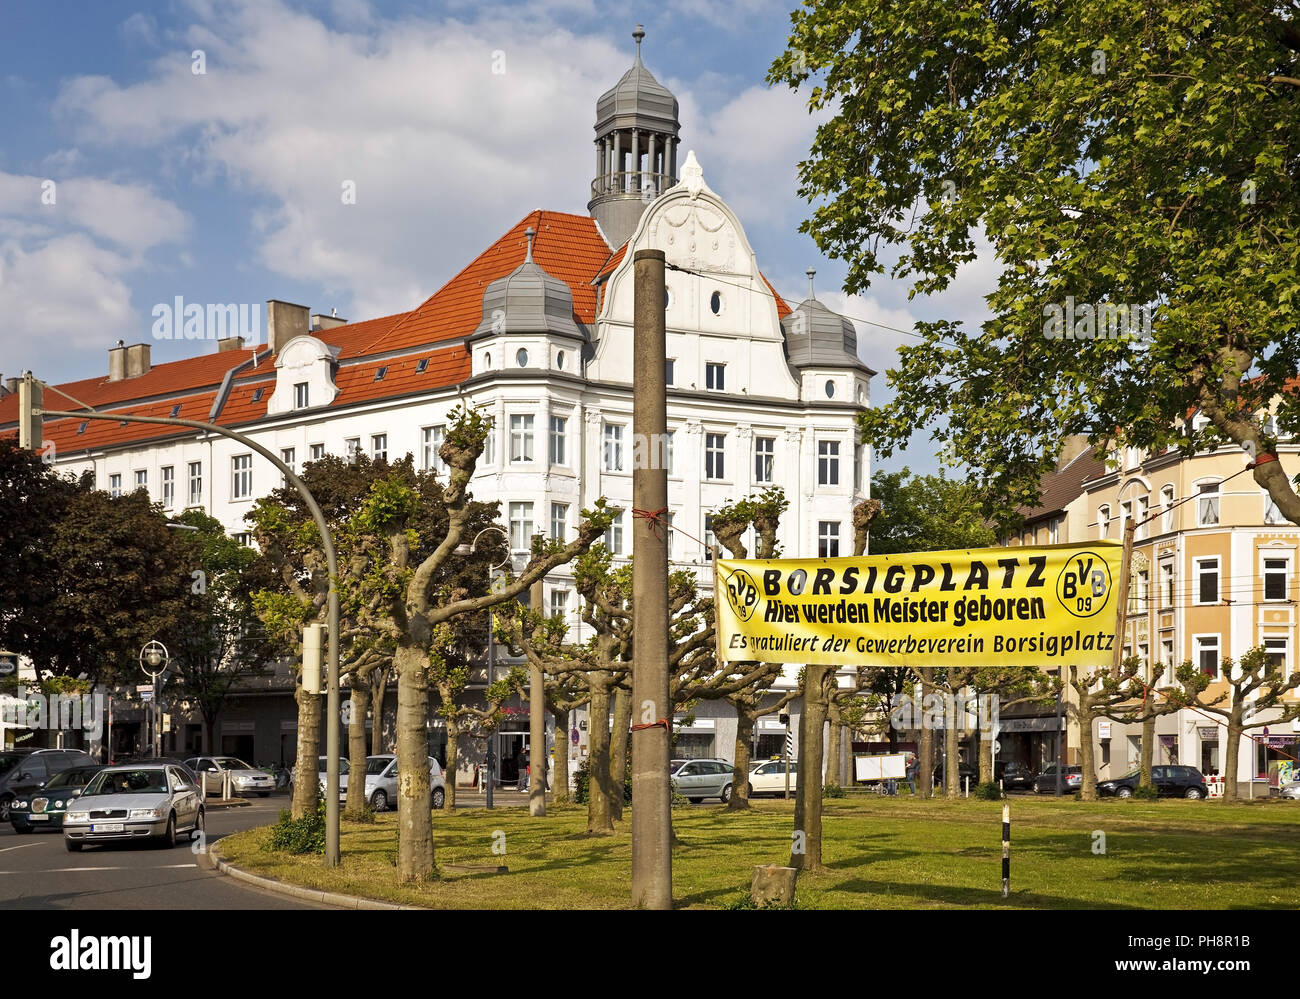 Borsigplatz, Dortmund, ruhr area, Germany Stock Photo